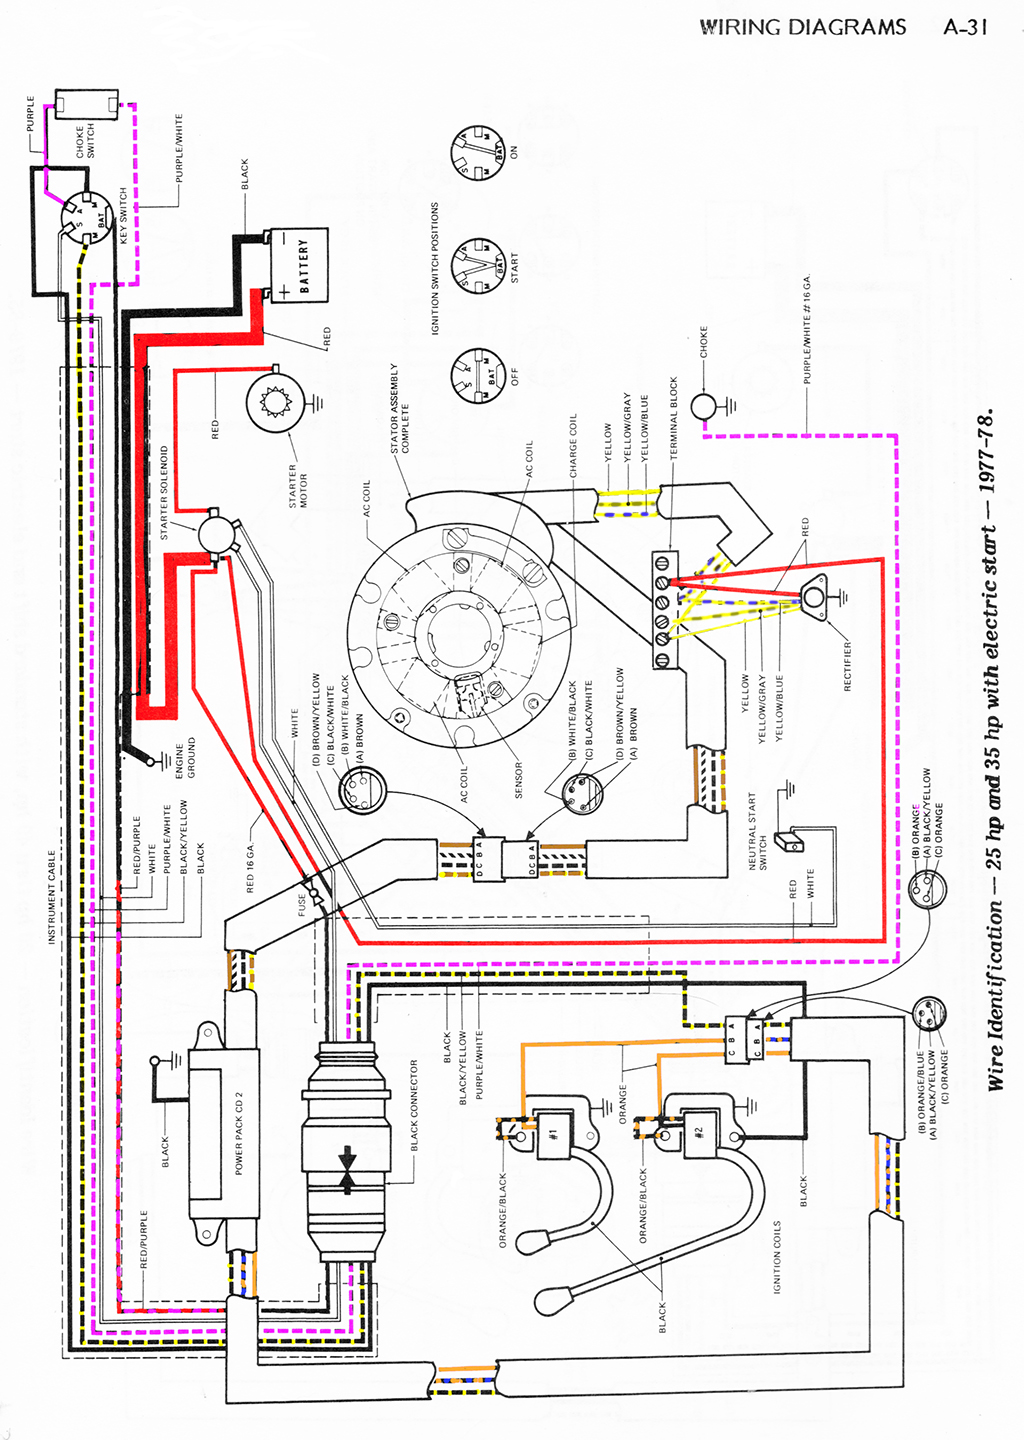 1977 Evinrude Wiring Diagram - Wiring Diagram Schemas